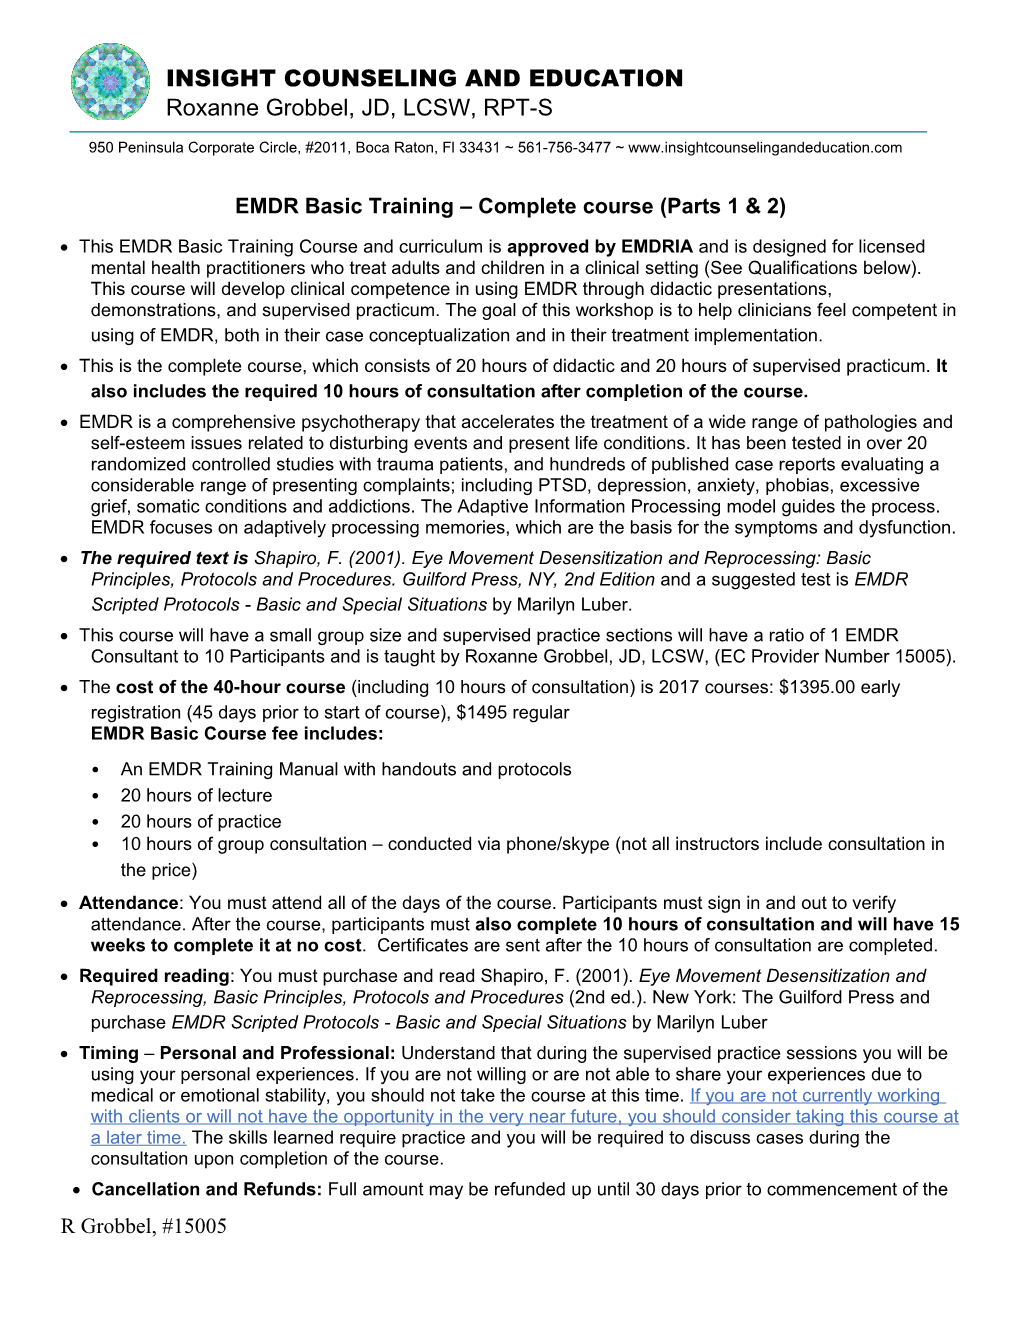 EMDR Basic Training Complete Course (Parts 1 & 2)